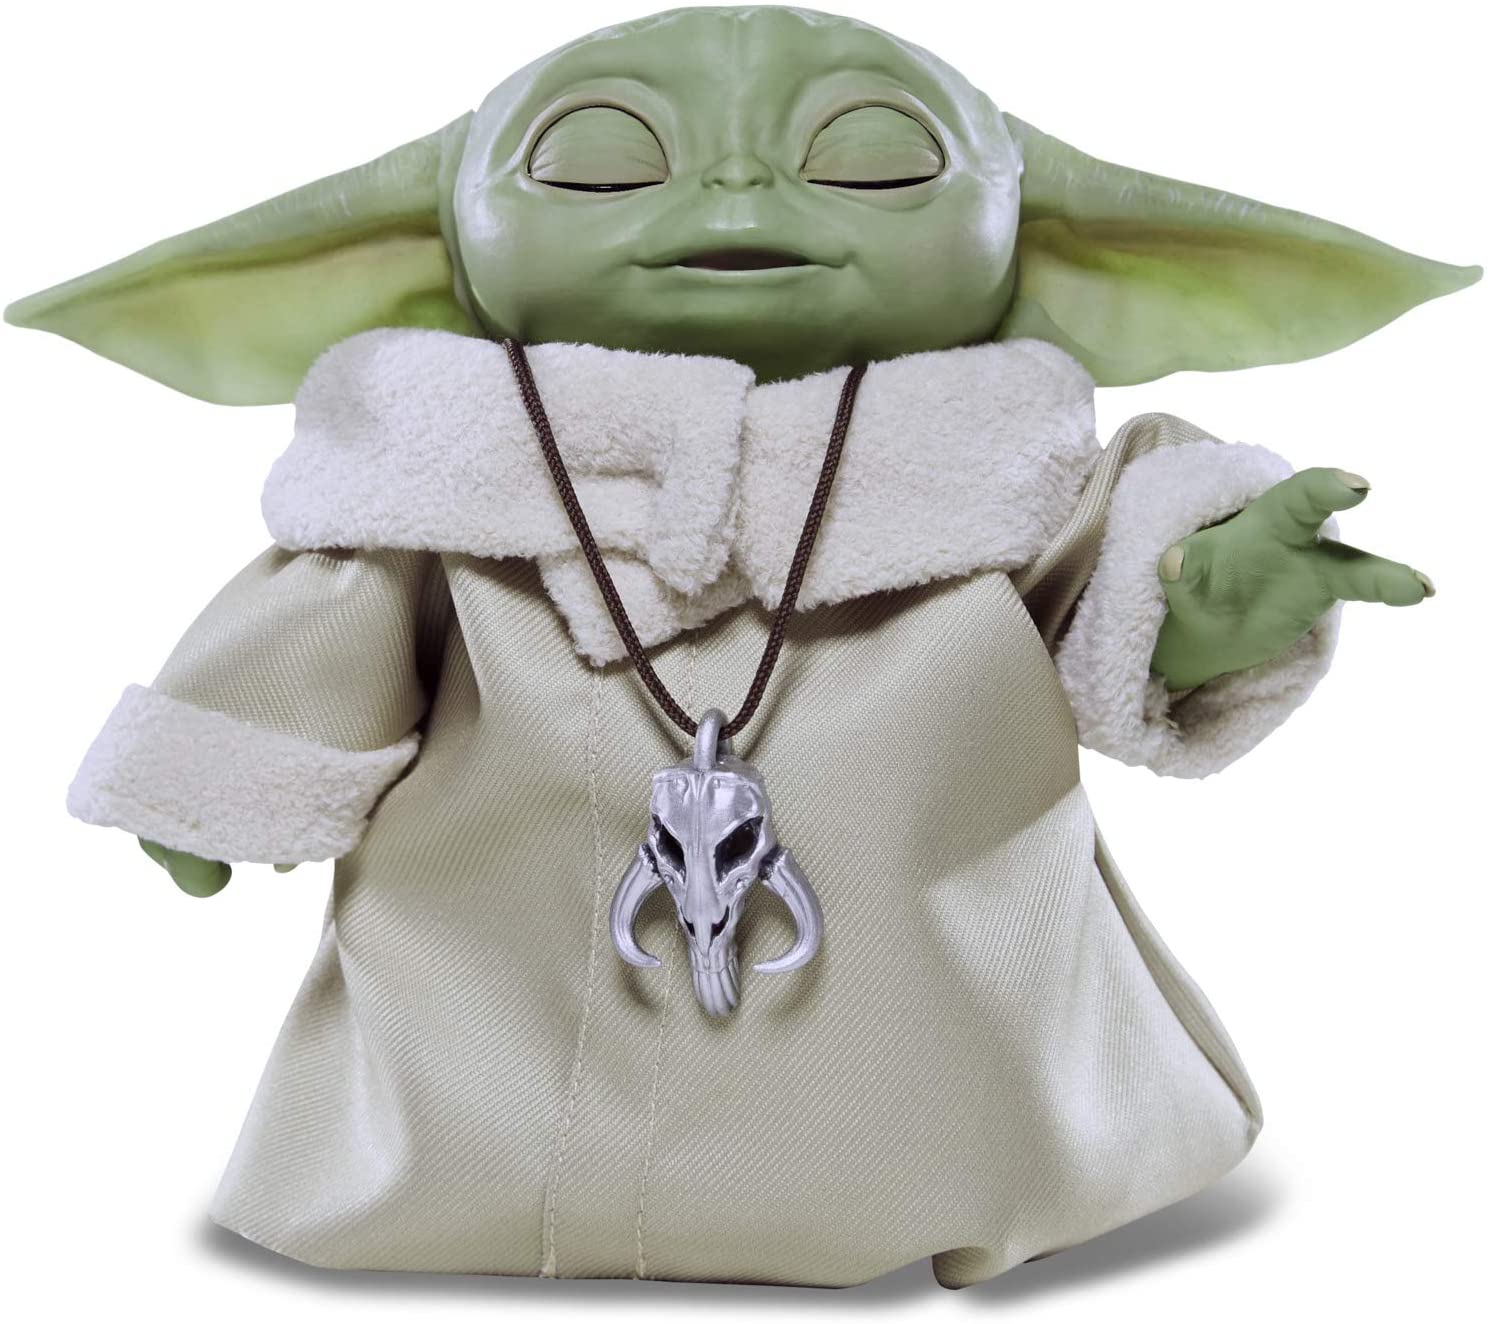 Star Wars The Child Animatronic Edition “AKA Baby Yoda”